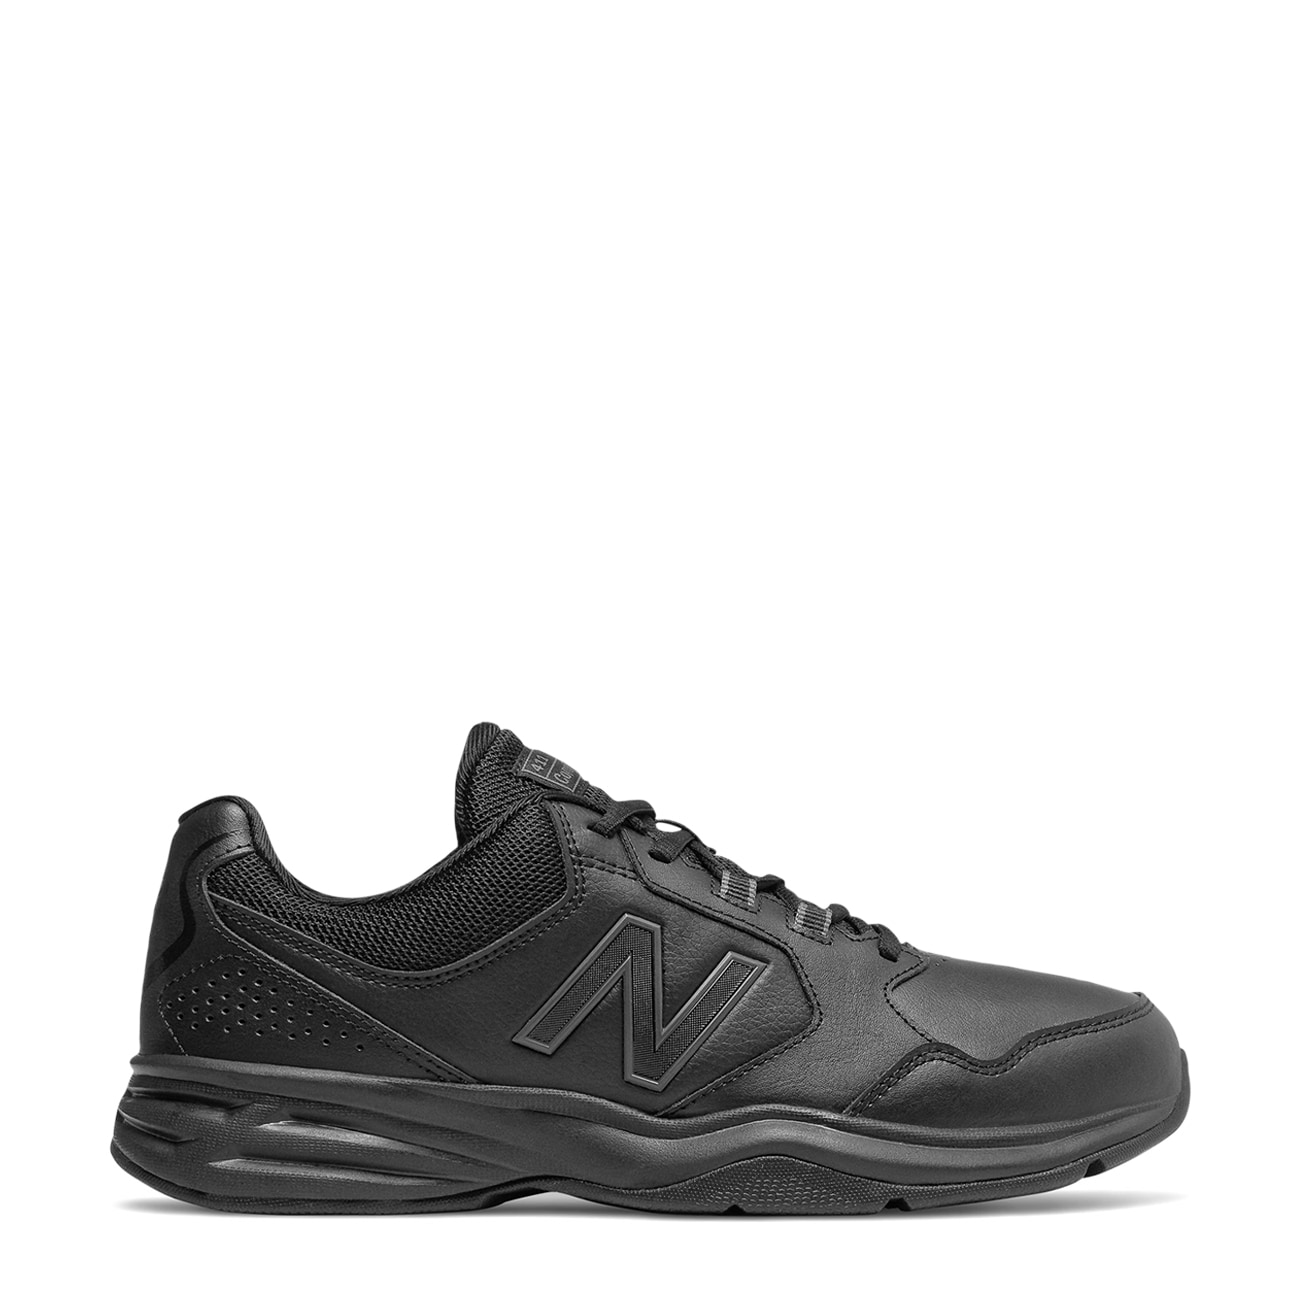 New Balance Men's 411 Running Shoe | The Shoe Company